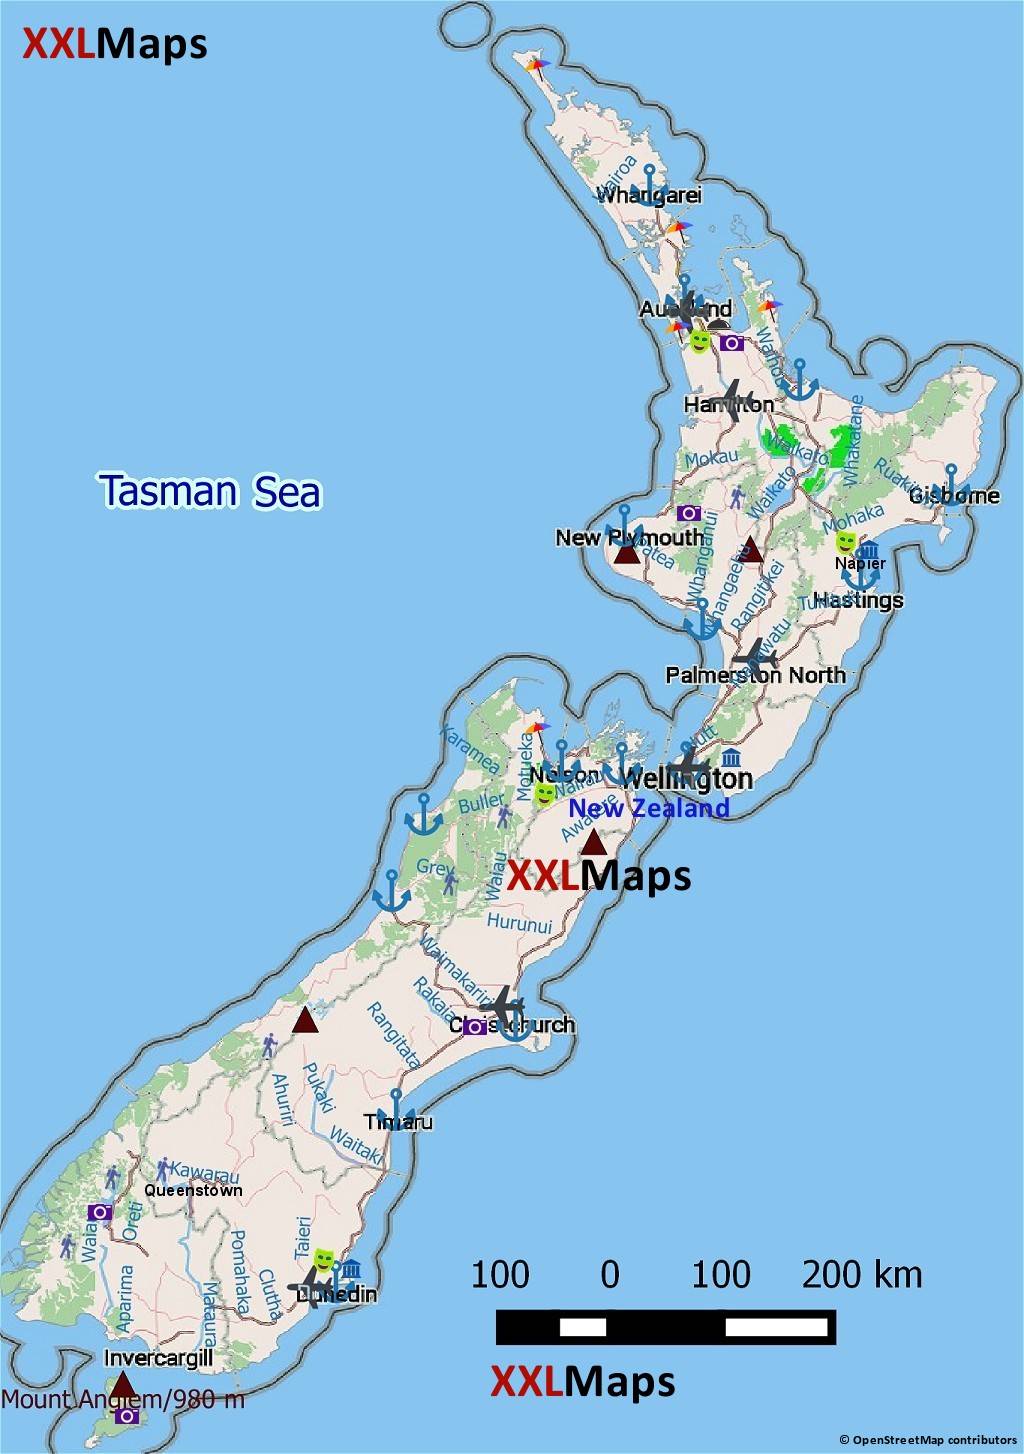 Turist kart over New Zealand